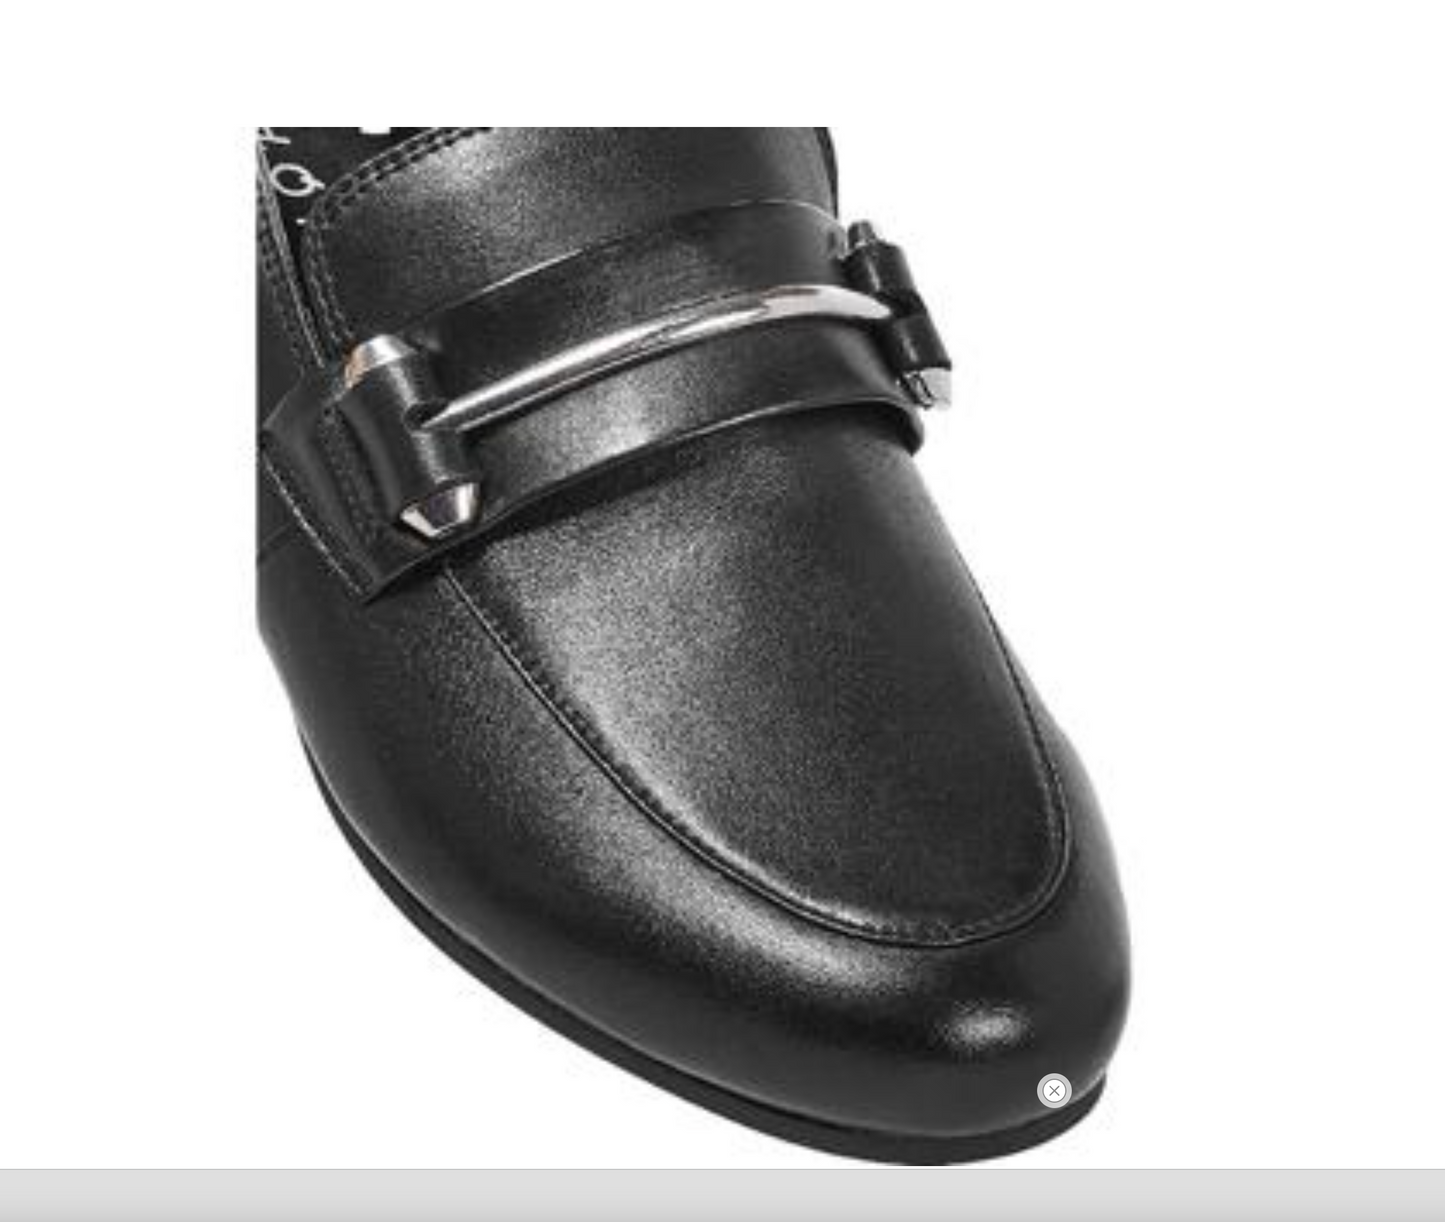 Aqua Women's Kim Black Leather Slip-on Fashion Loafers - SZ 9.5